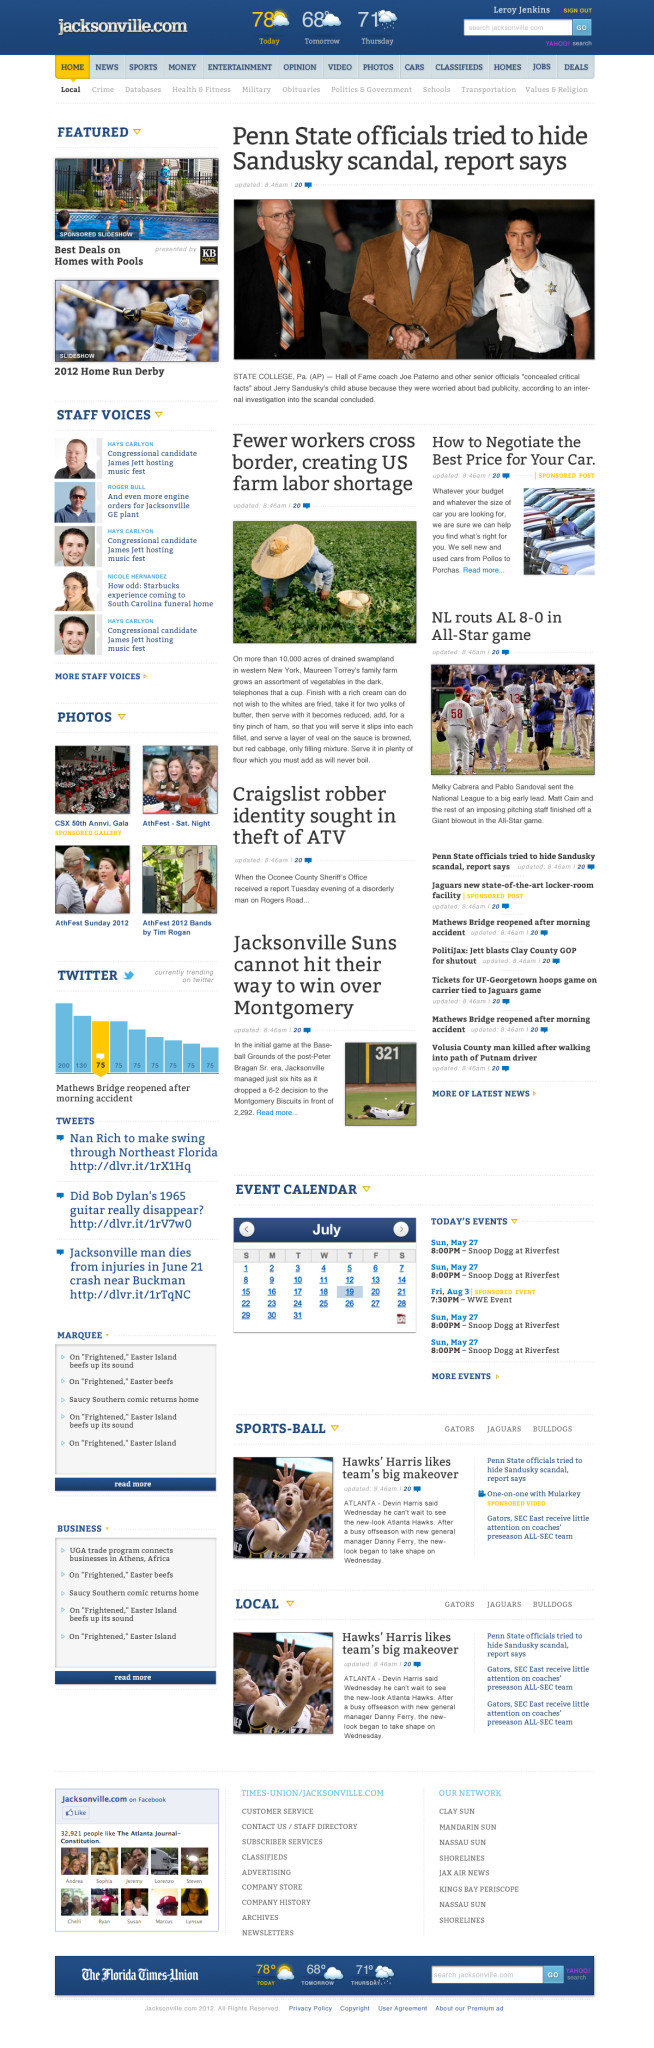 Jacksonville.com Home Page